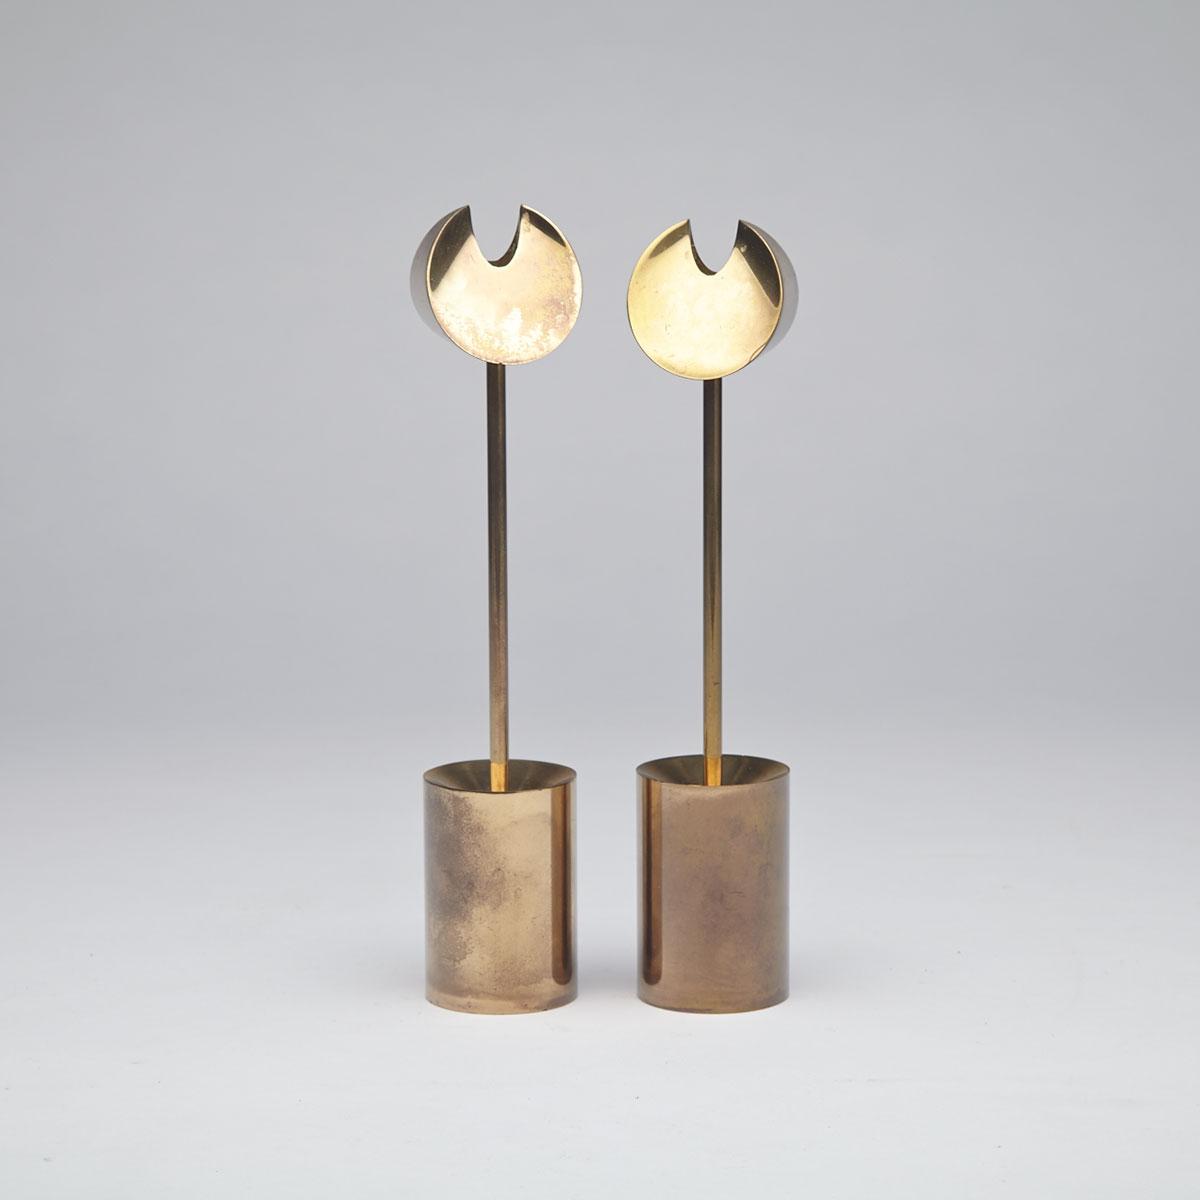 Pierre Forsell for skultuna gilt brass ‘Croissant’ Candlesticks, Sweden, c.1960